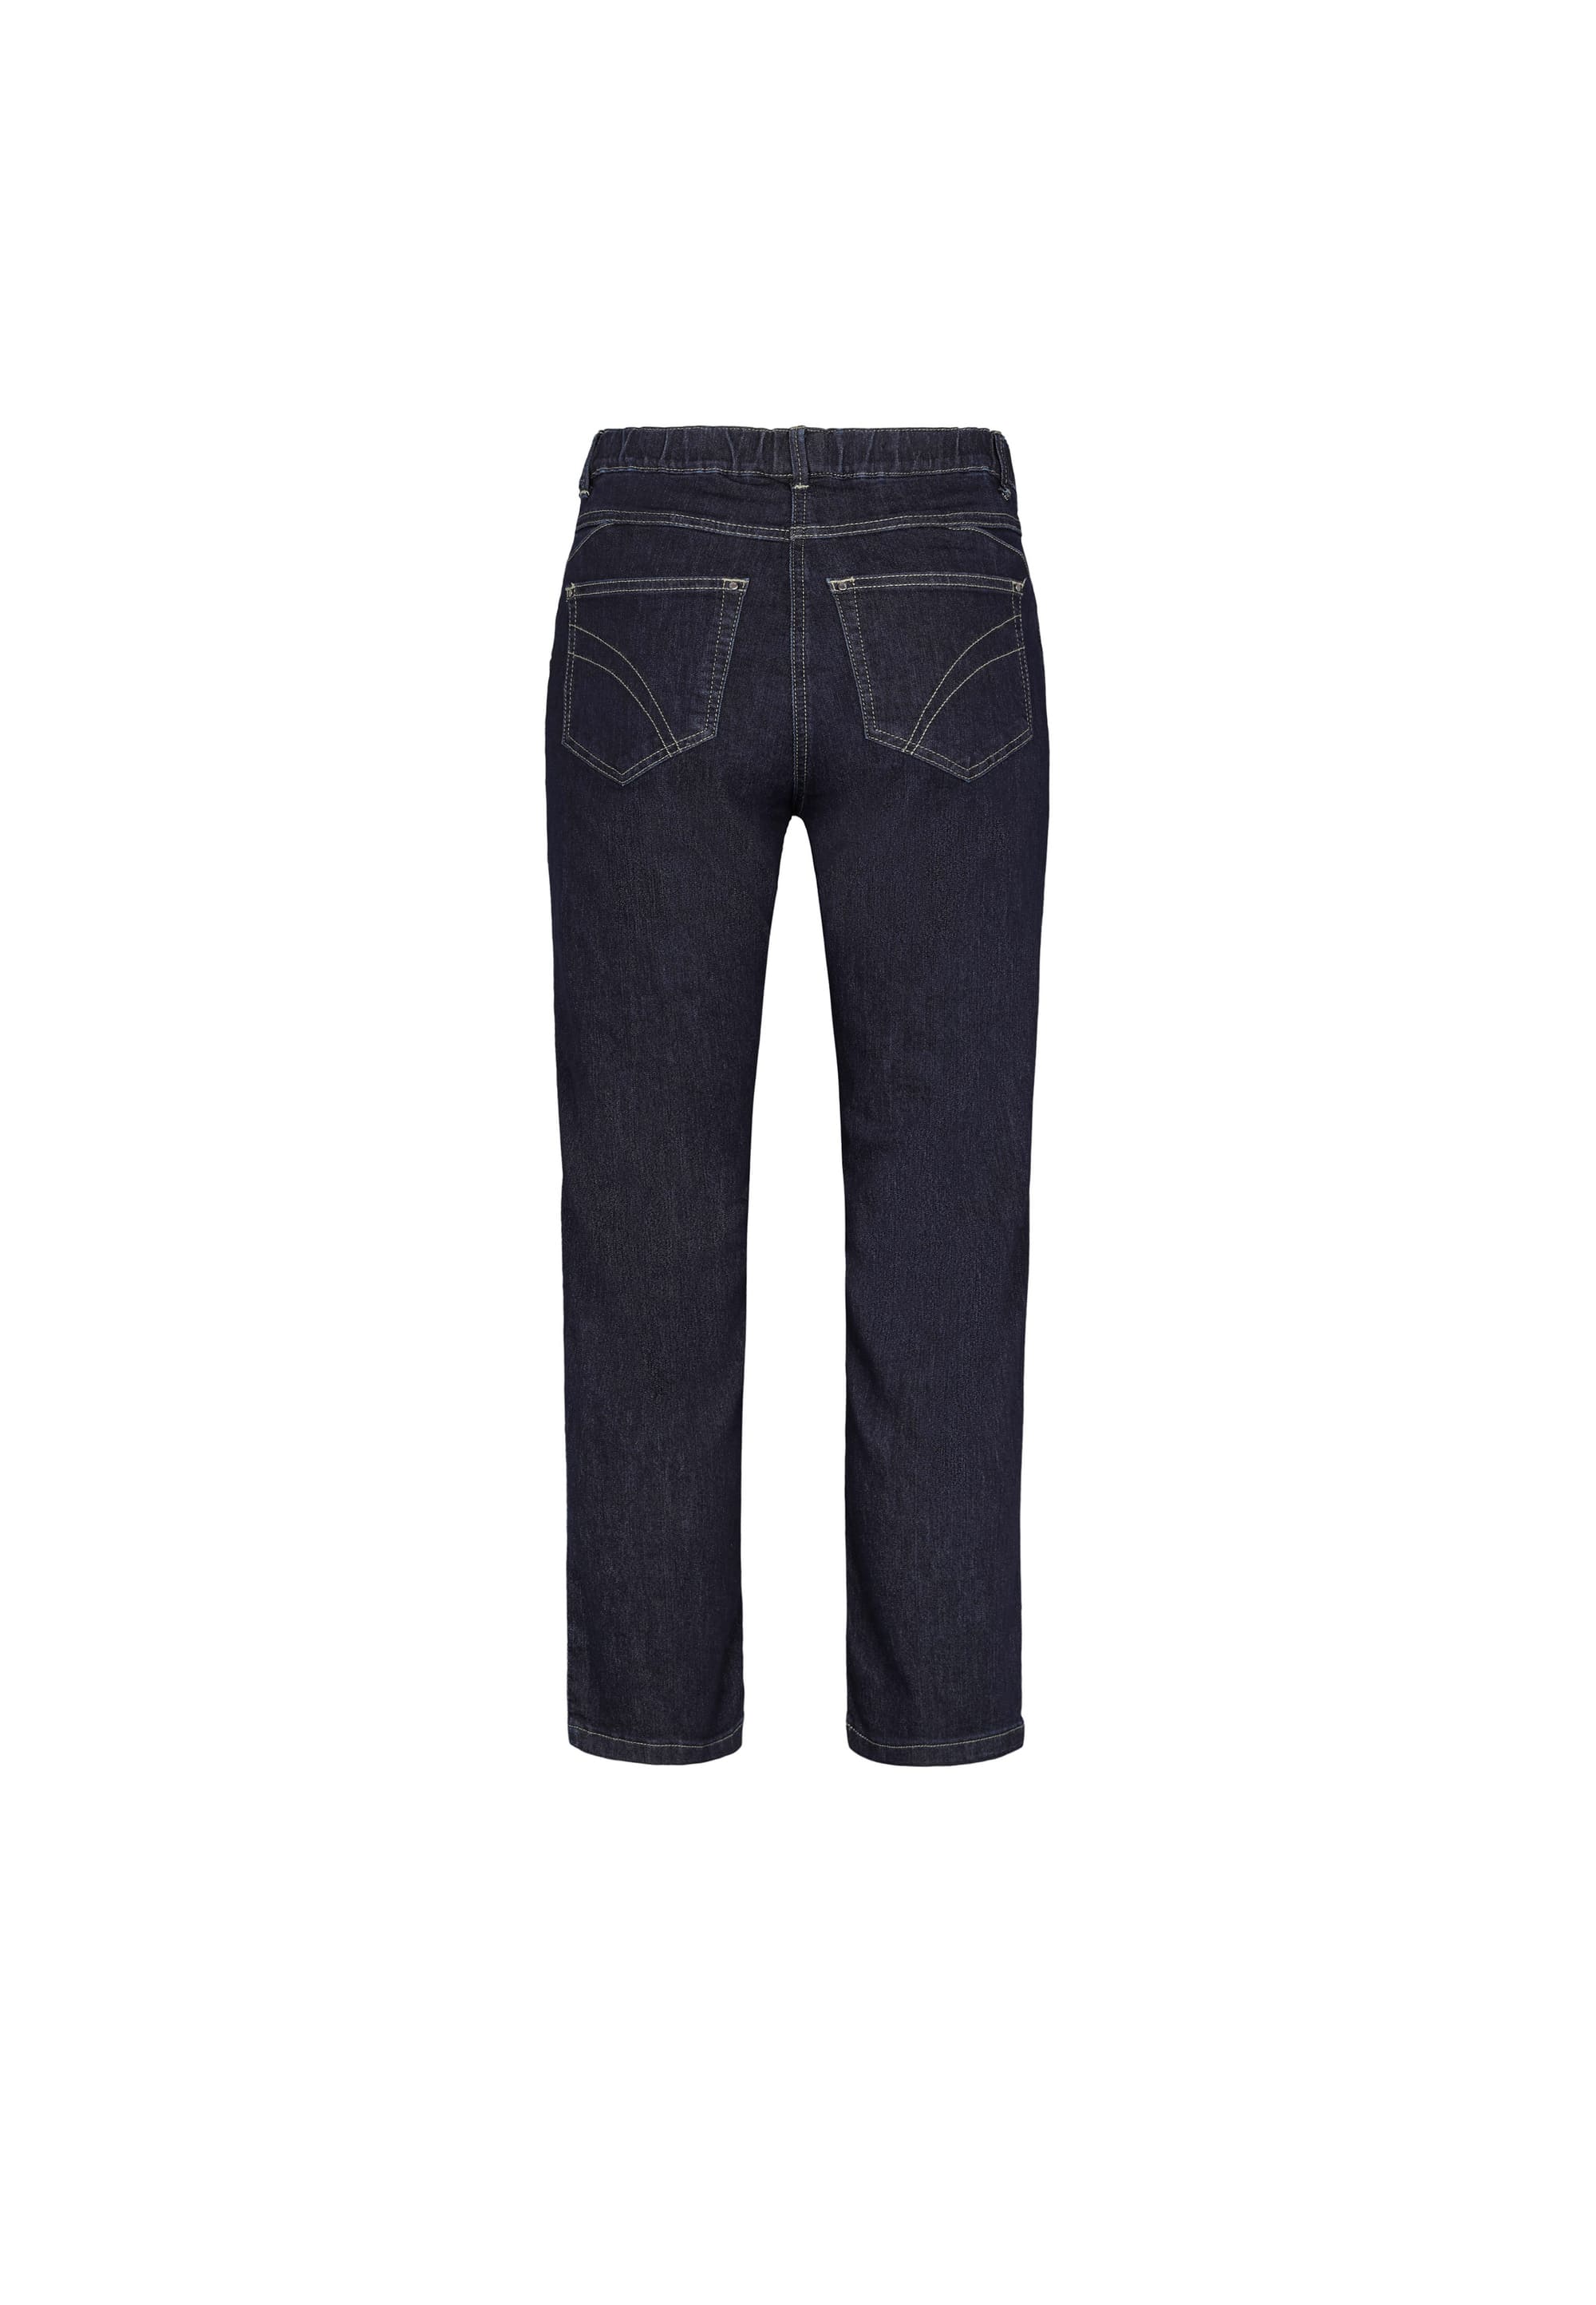 LAURIE Helen Straight - Extra Short Length Trousers STRAIGHT 49501 Dark Blue Denim